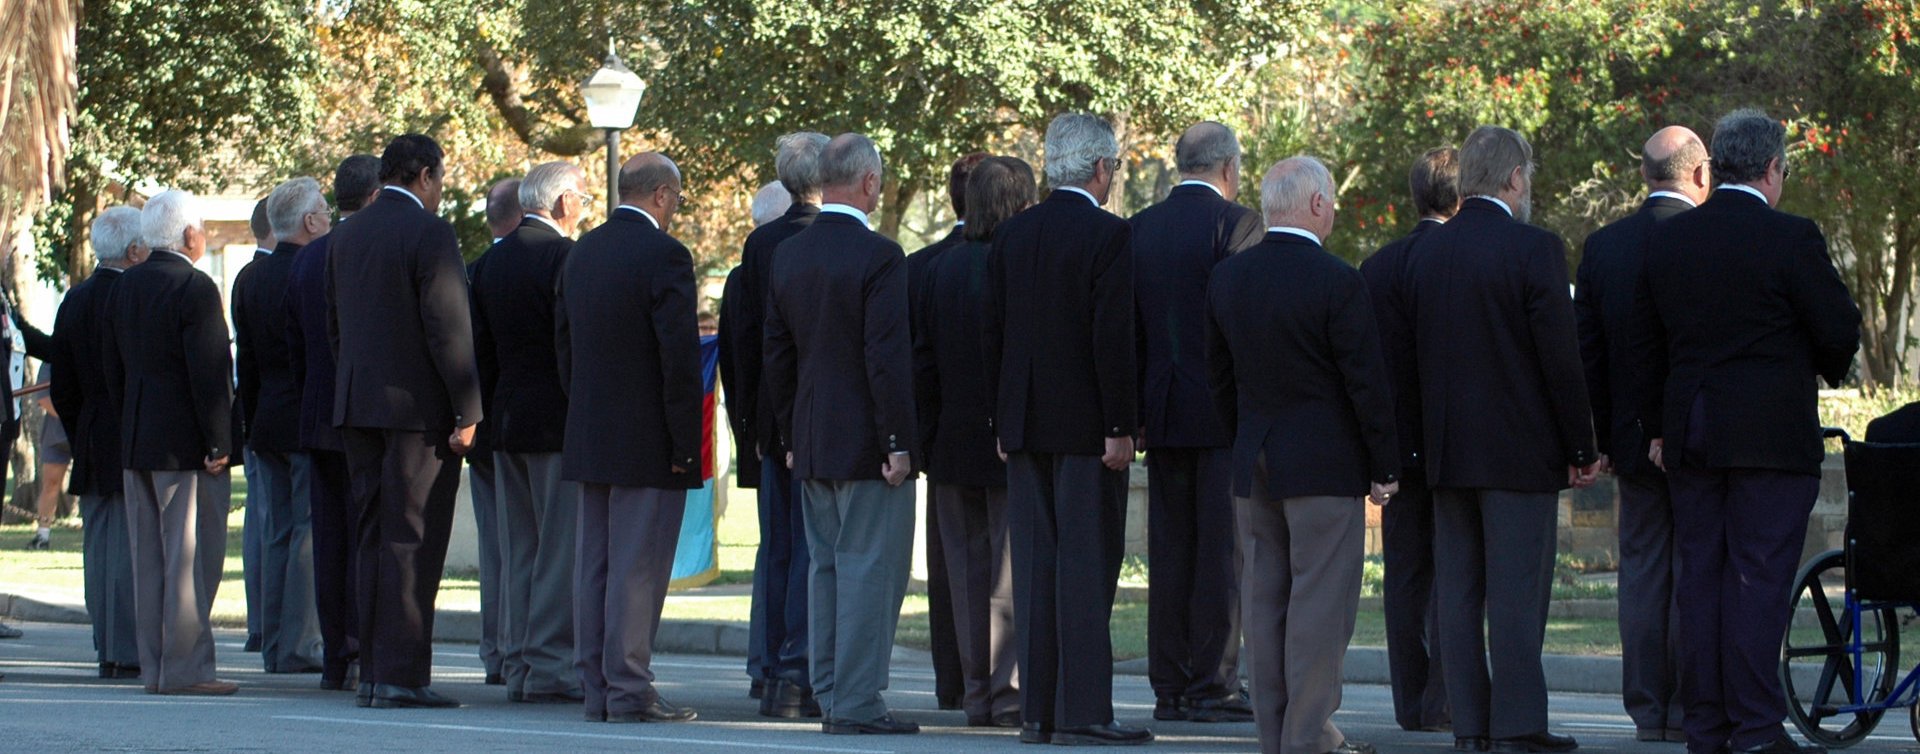 Group of men in black suit